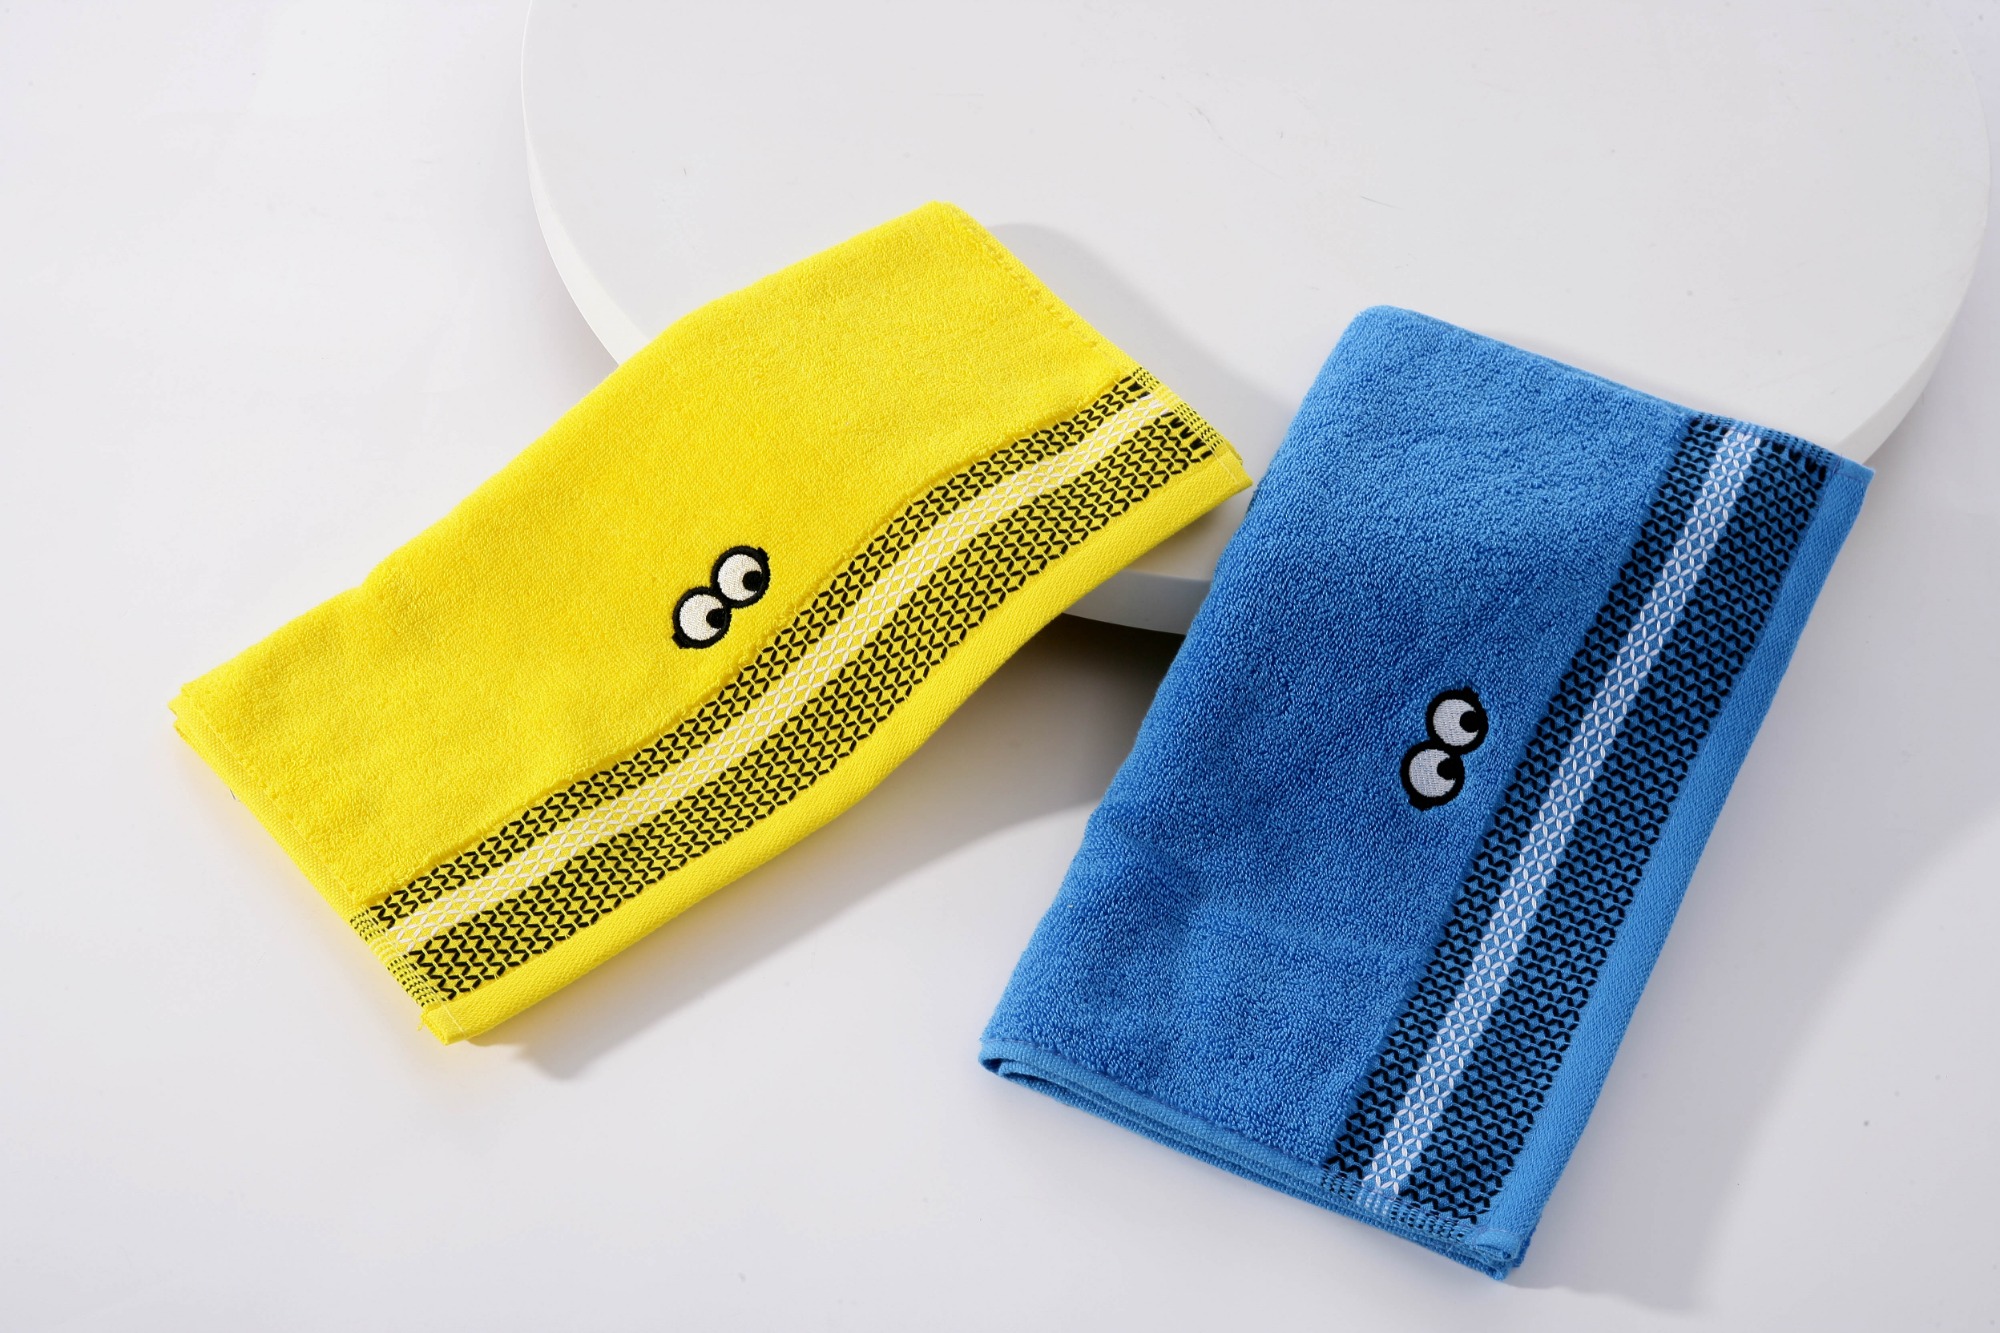 Minions cotton embroidered square towel (F8476)